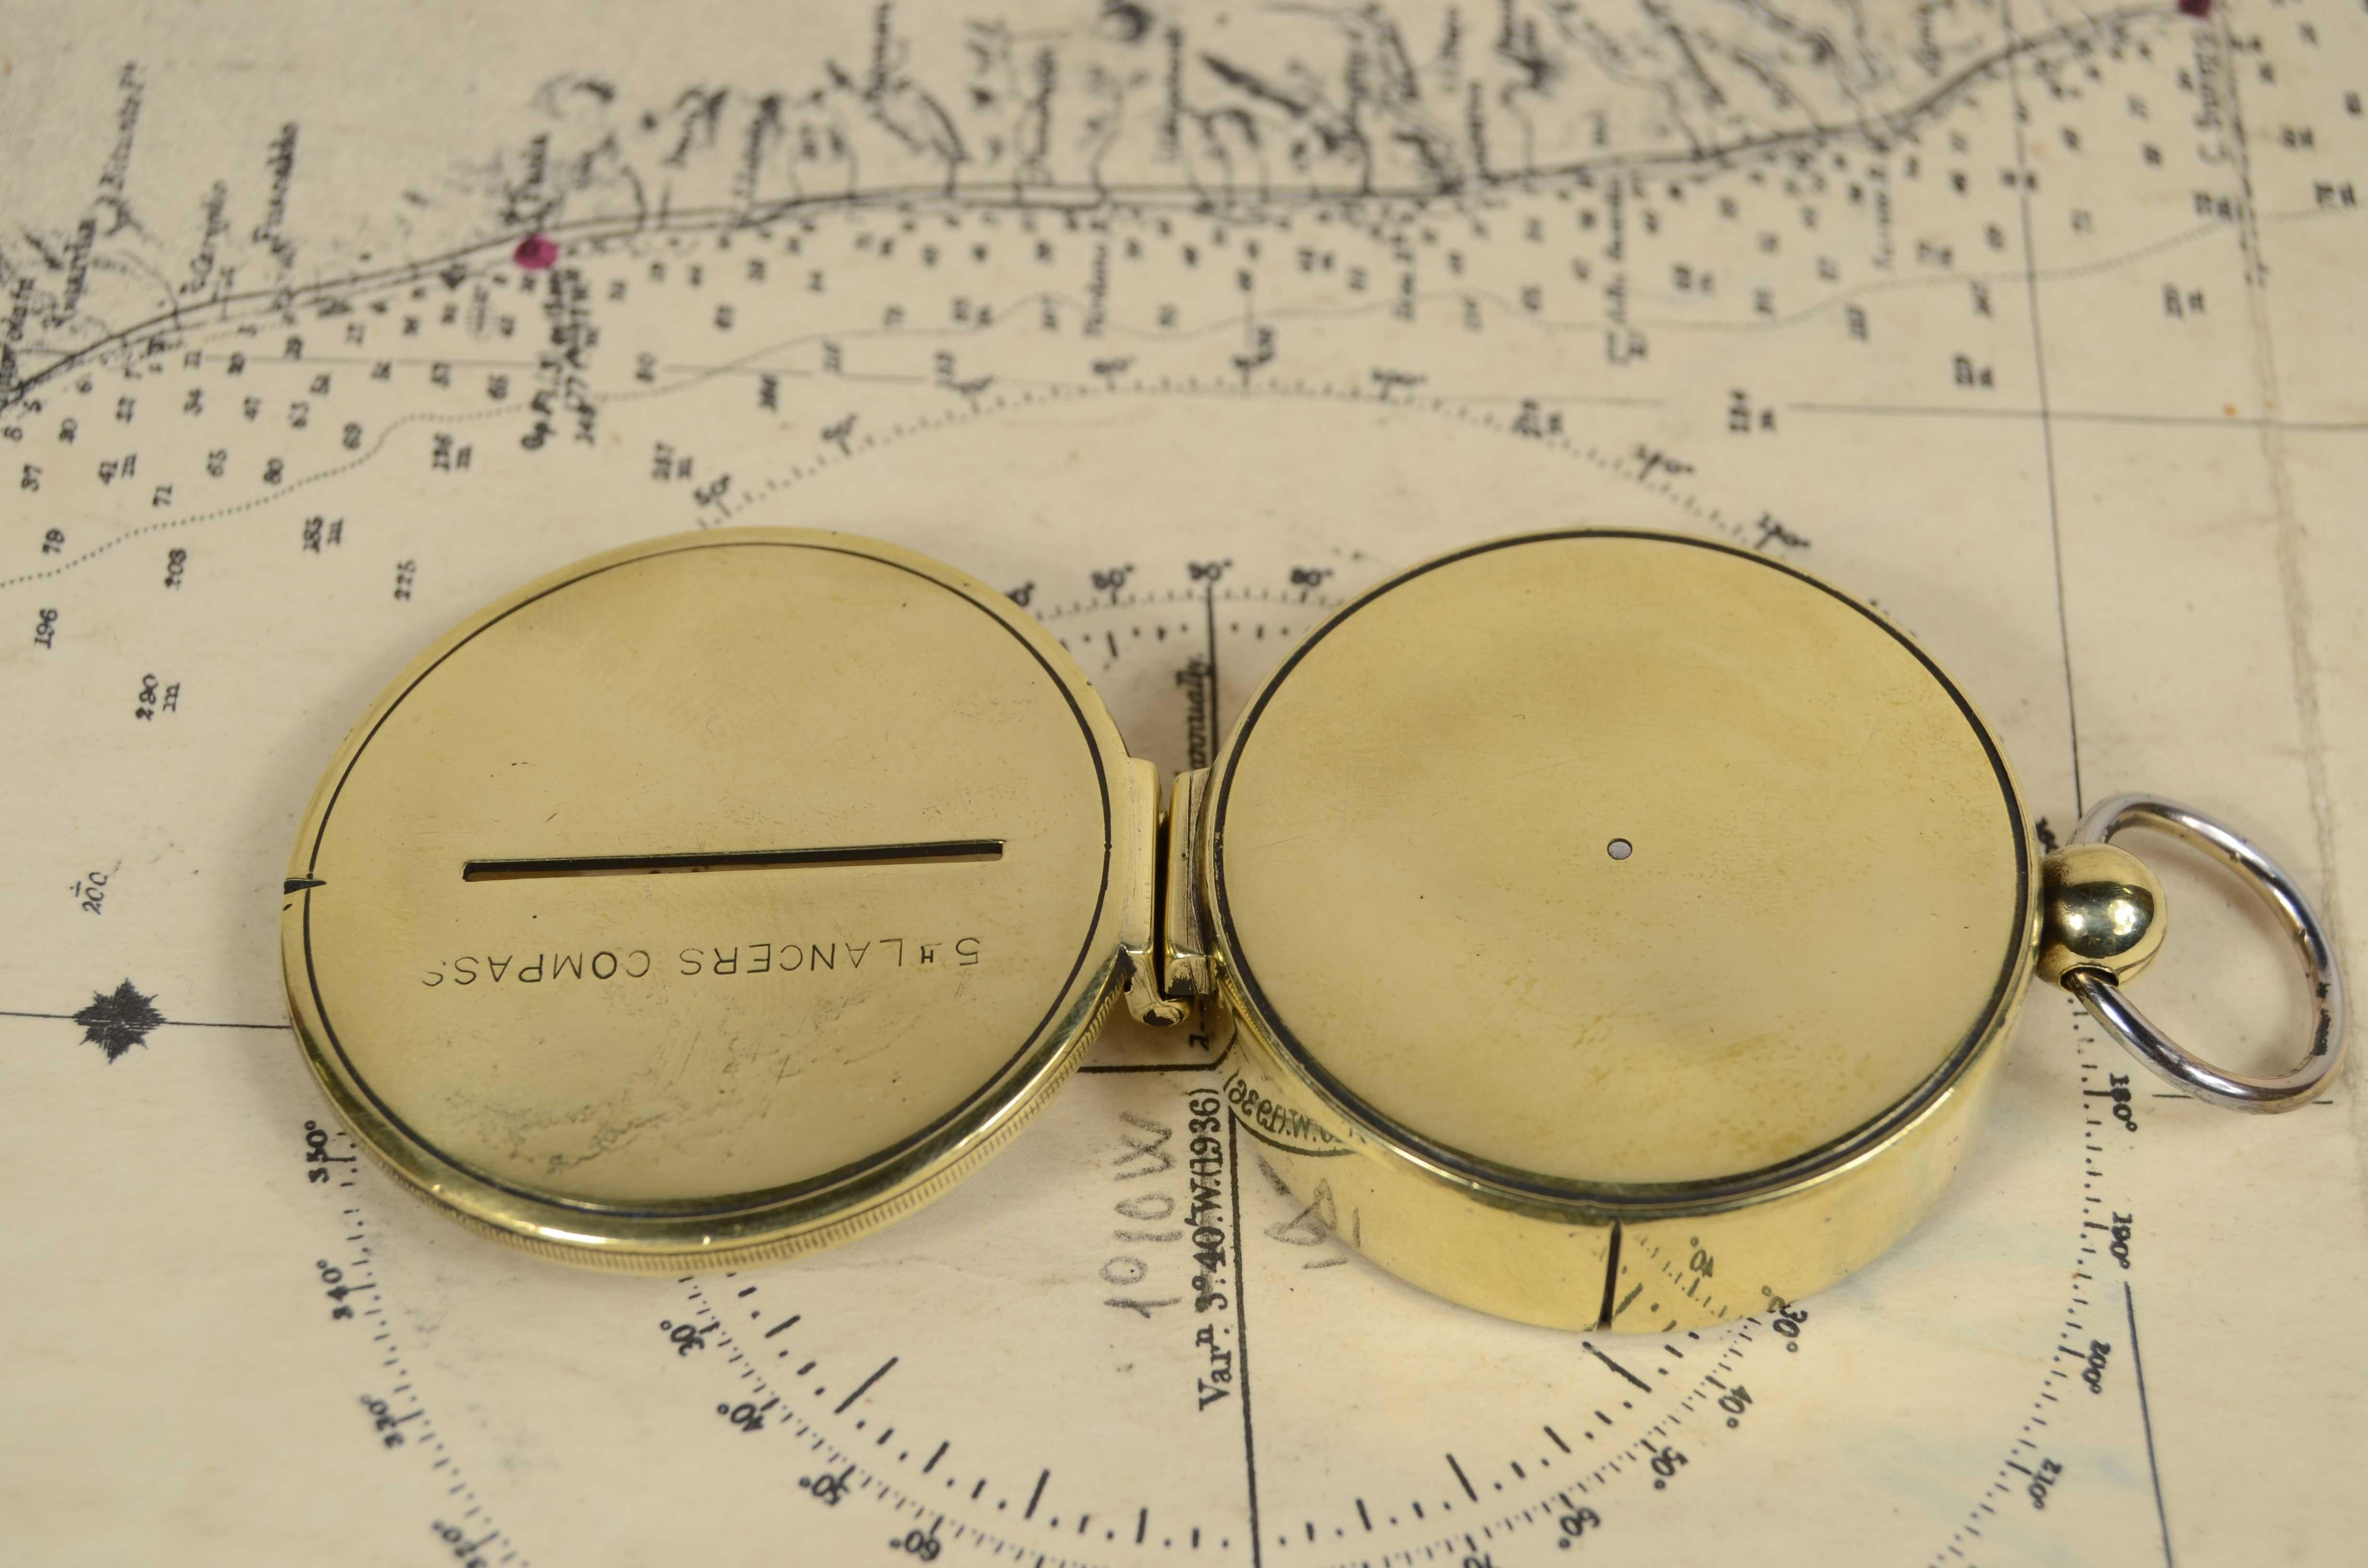 Brass Bussola nautica da tasca in ottone, firmata 5m LANCERS COMPASS. Inghilterra 1920 For Sale